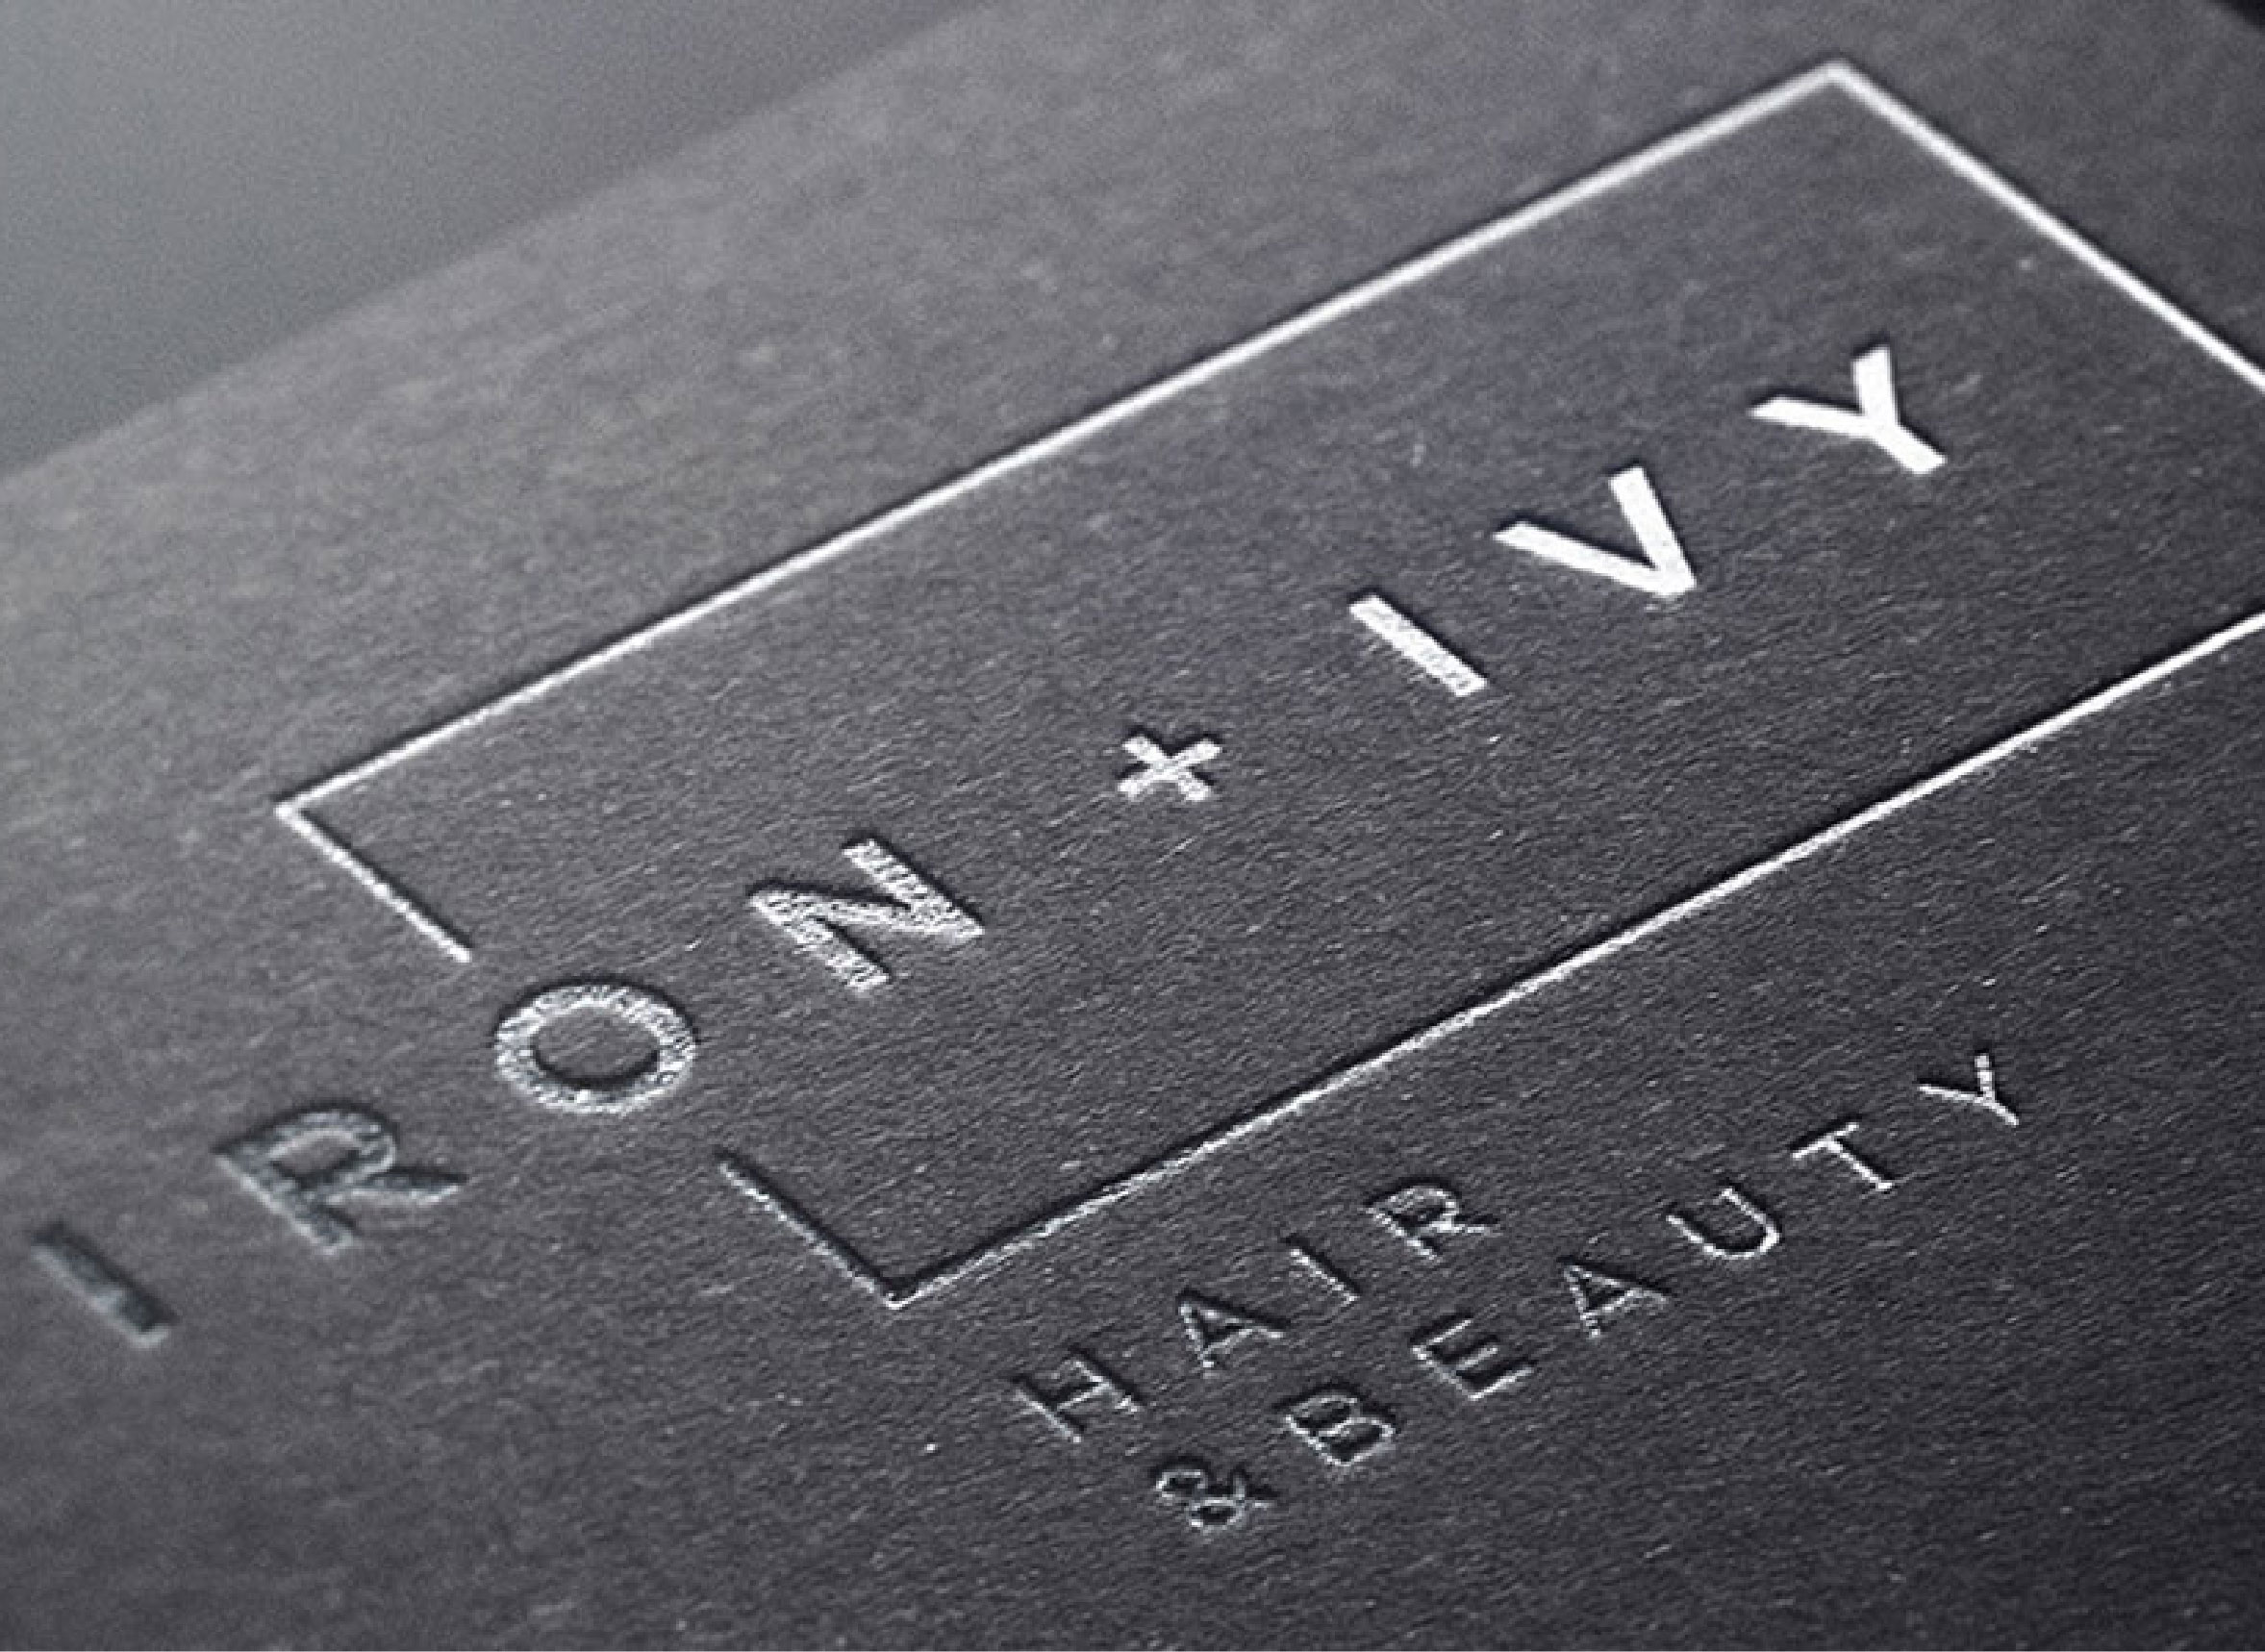 Iron + Ivy branding